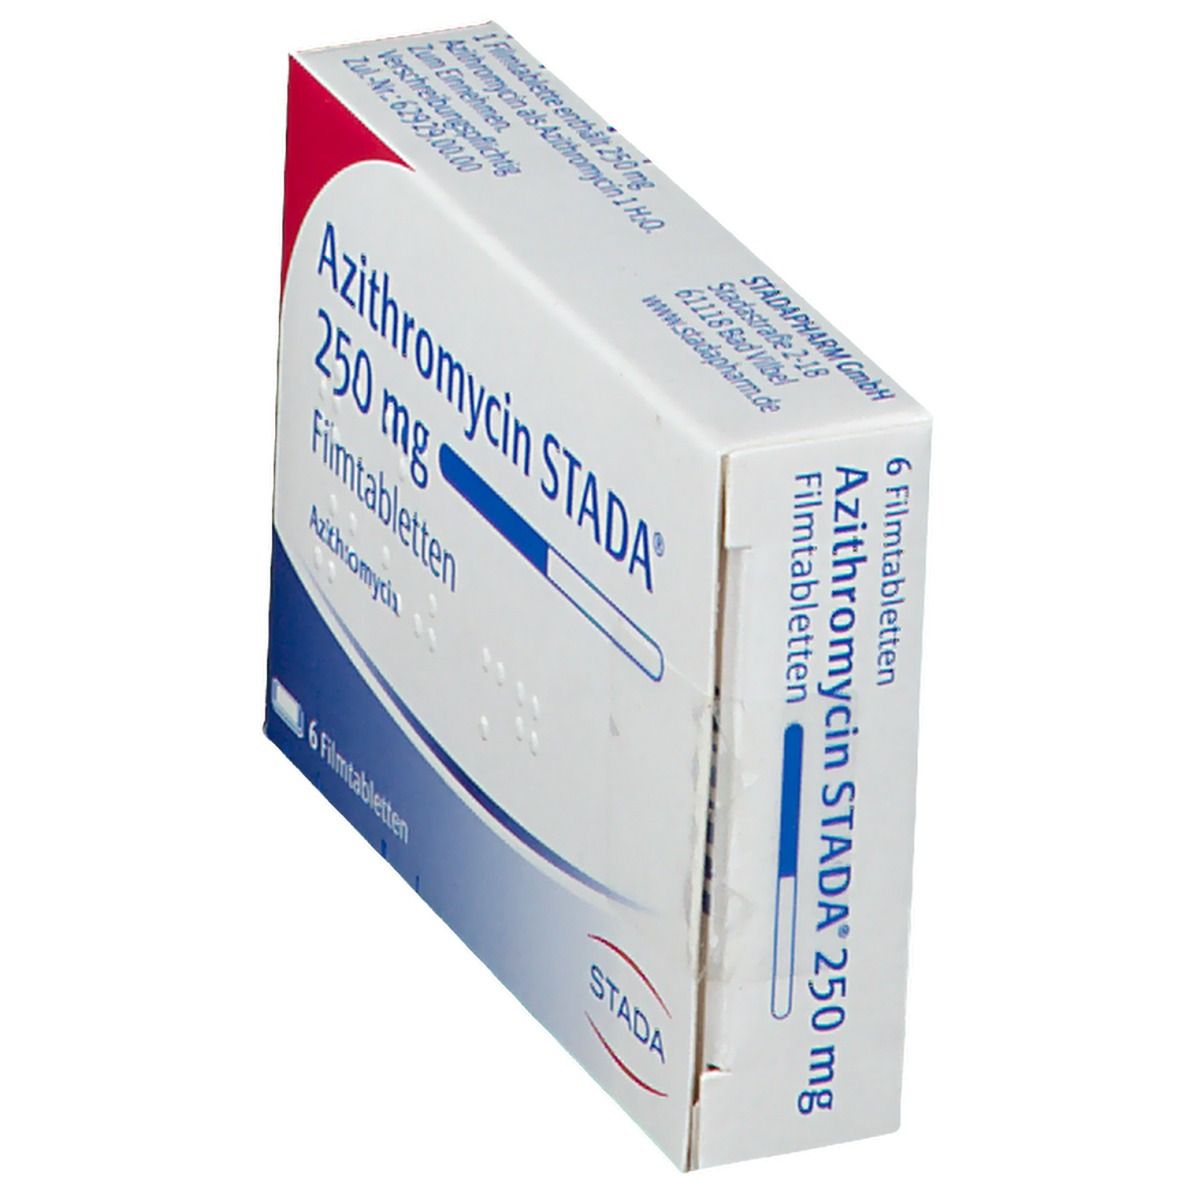 Azithromycin STADA® 250 mg